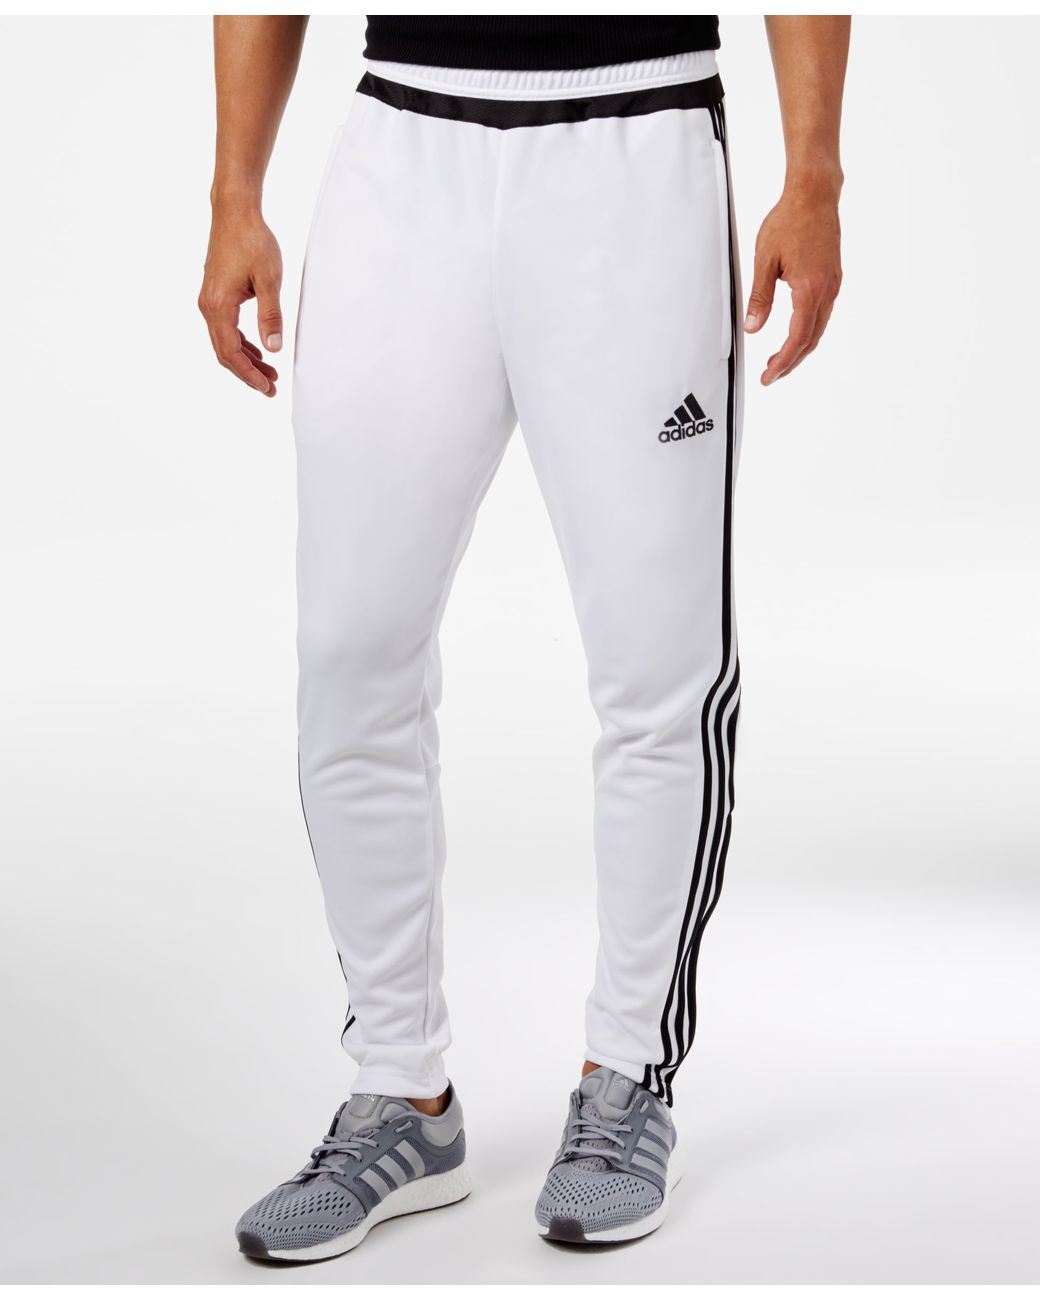 adidas Originals Synthetic Men's Tiro 15 Training Pants in White/Black  (White) for Men | Lyst